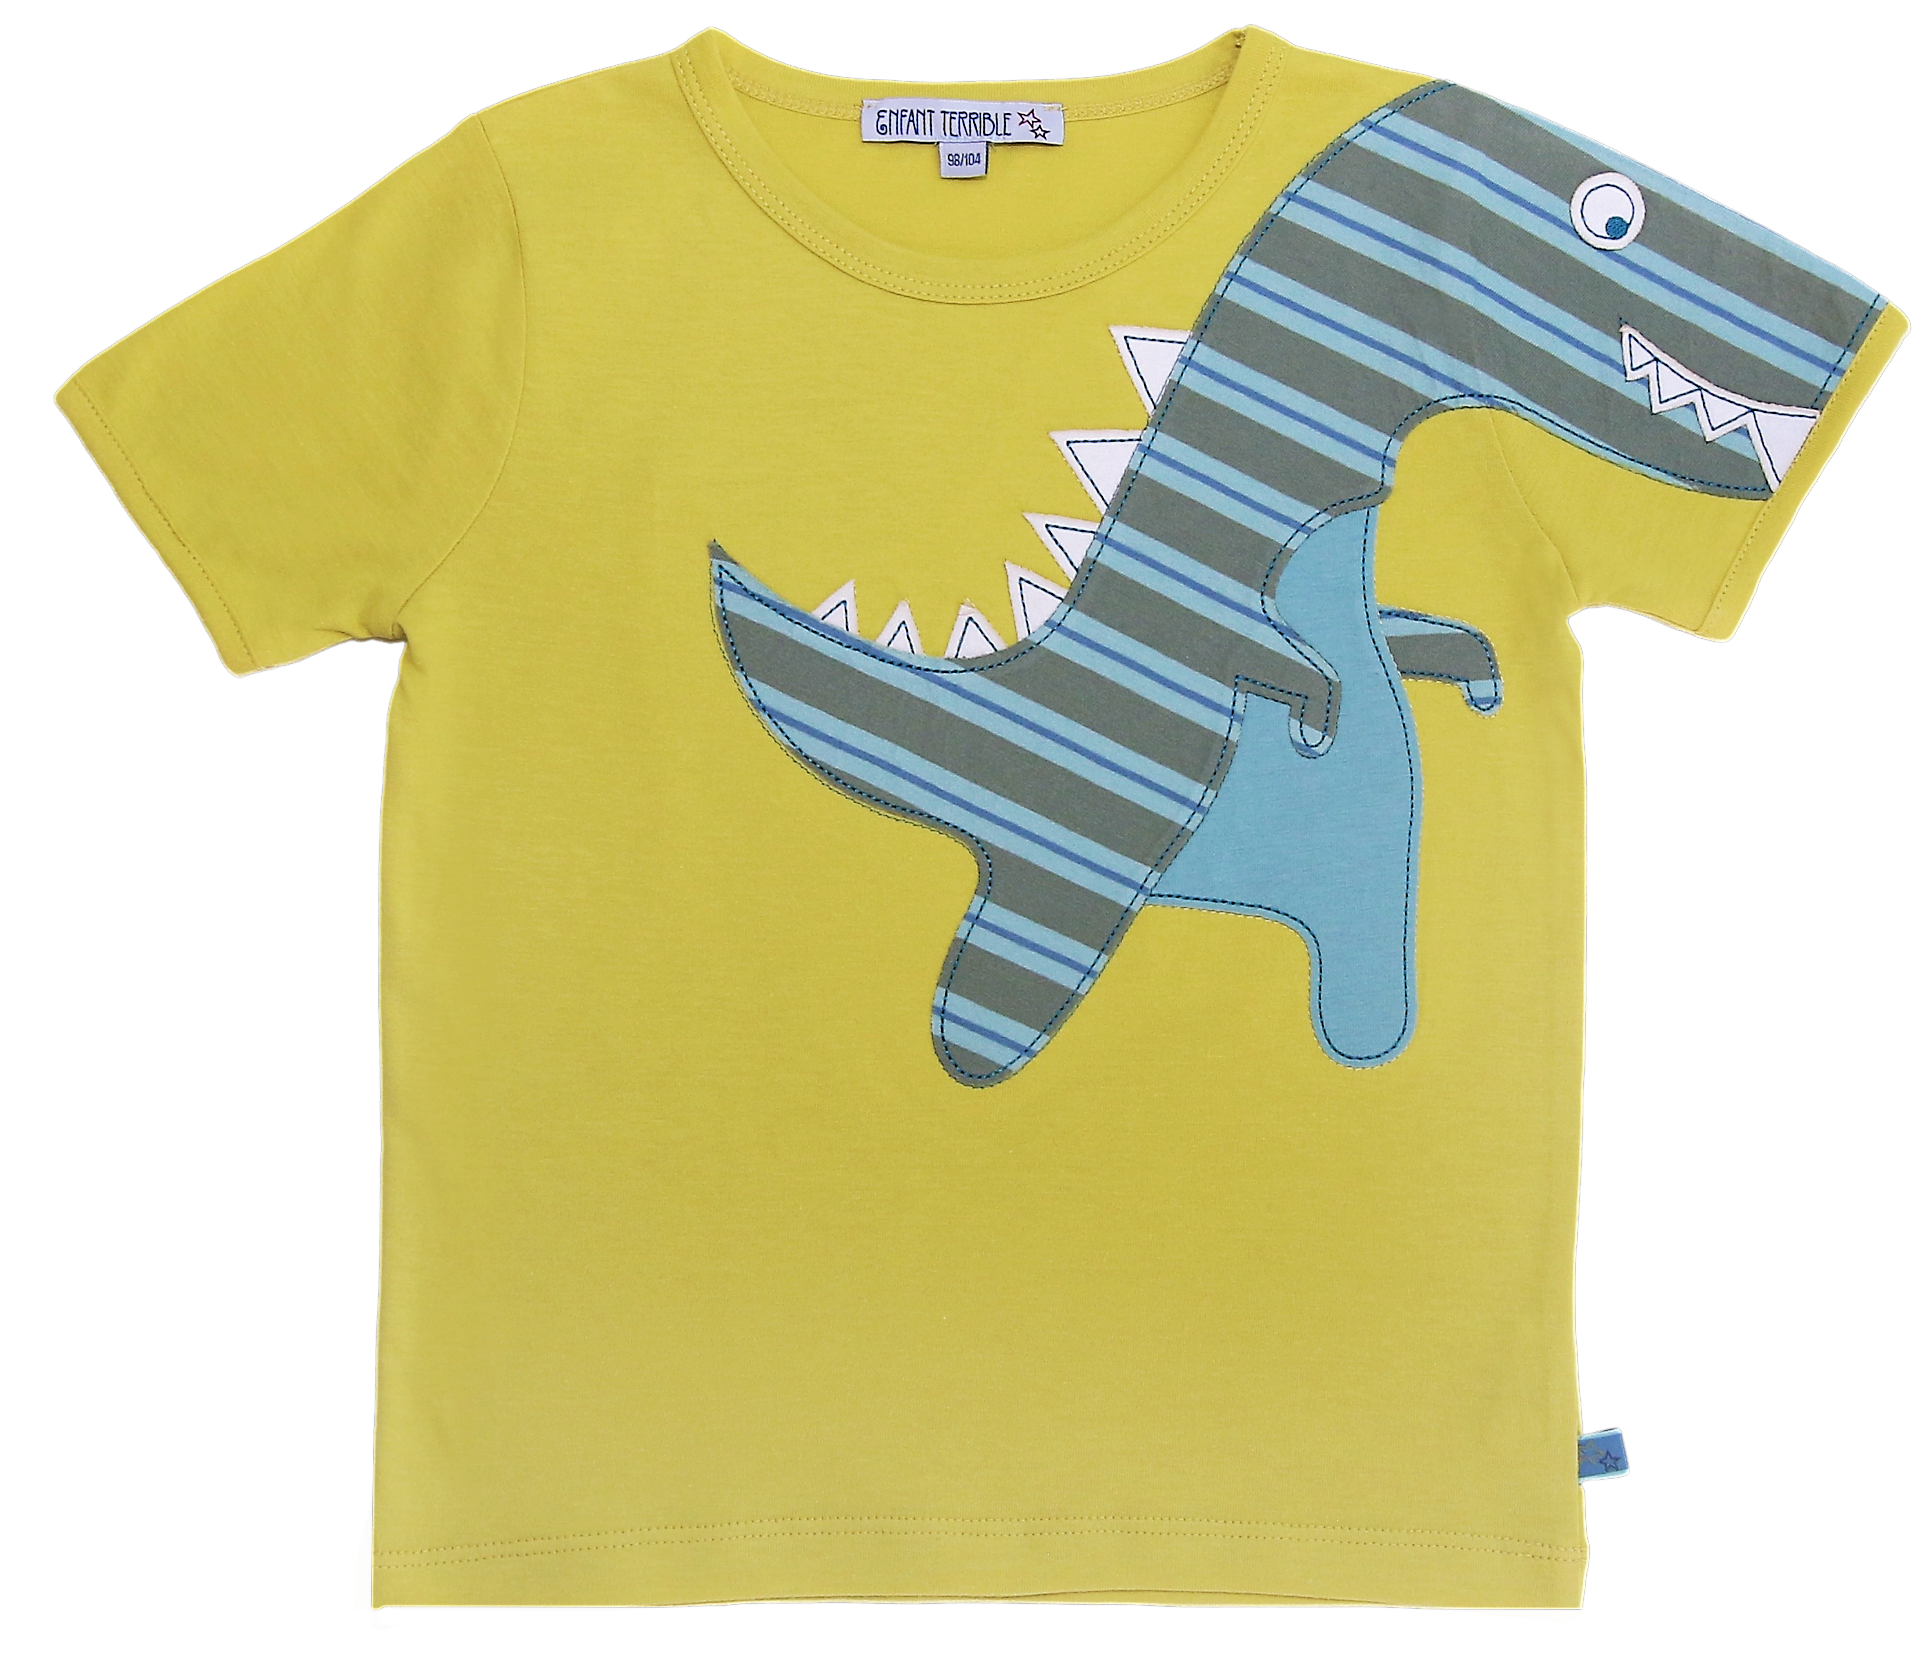 Enfant terrible - T-Shirt Dino limone